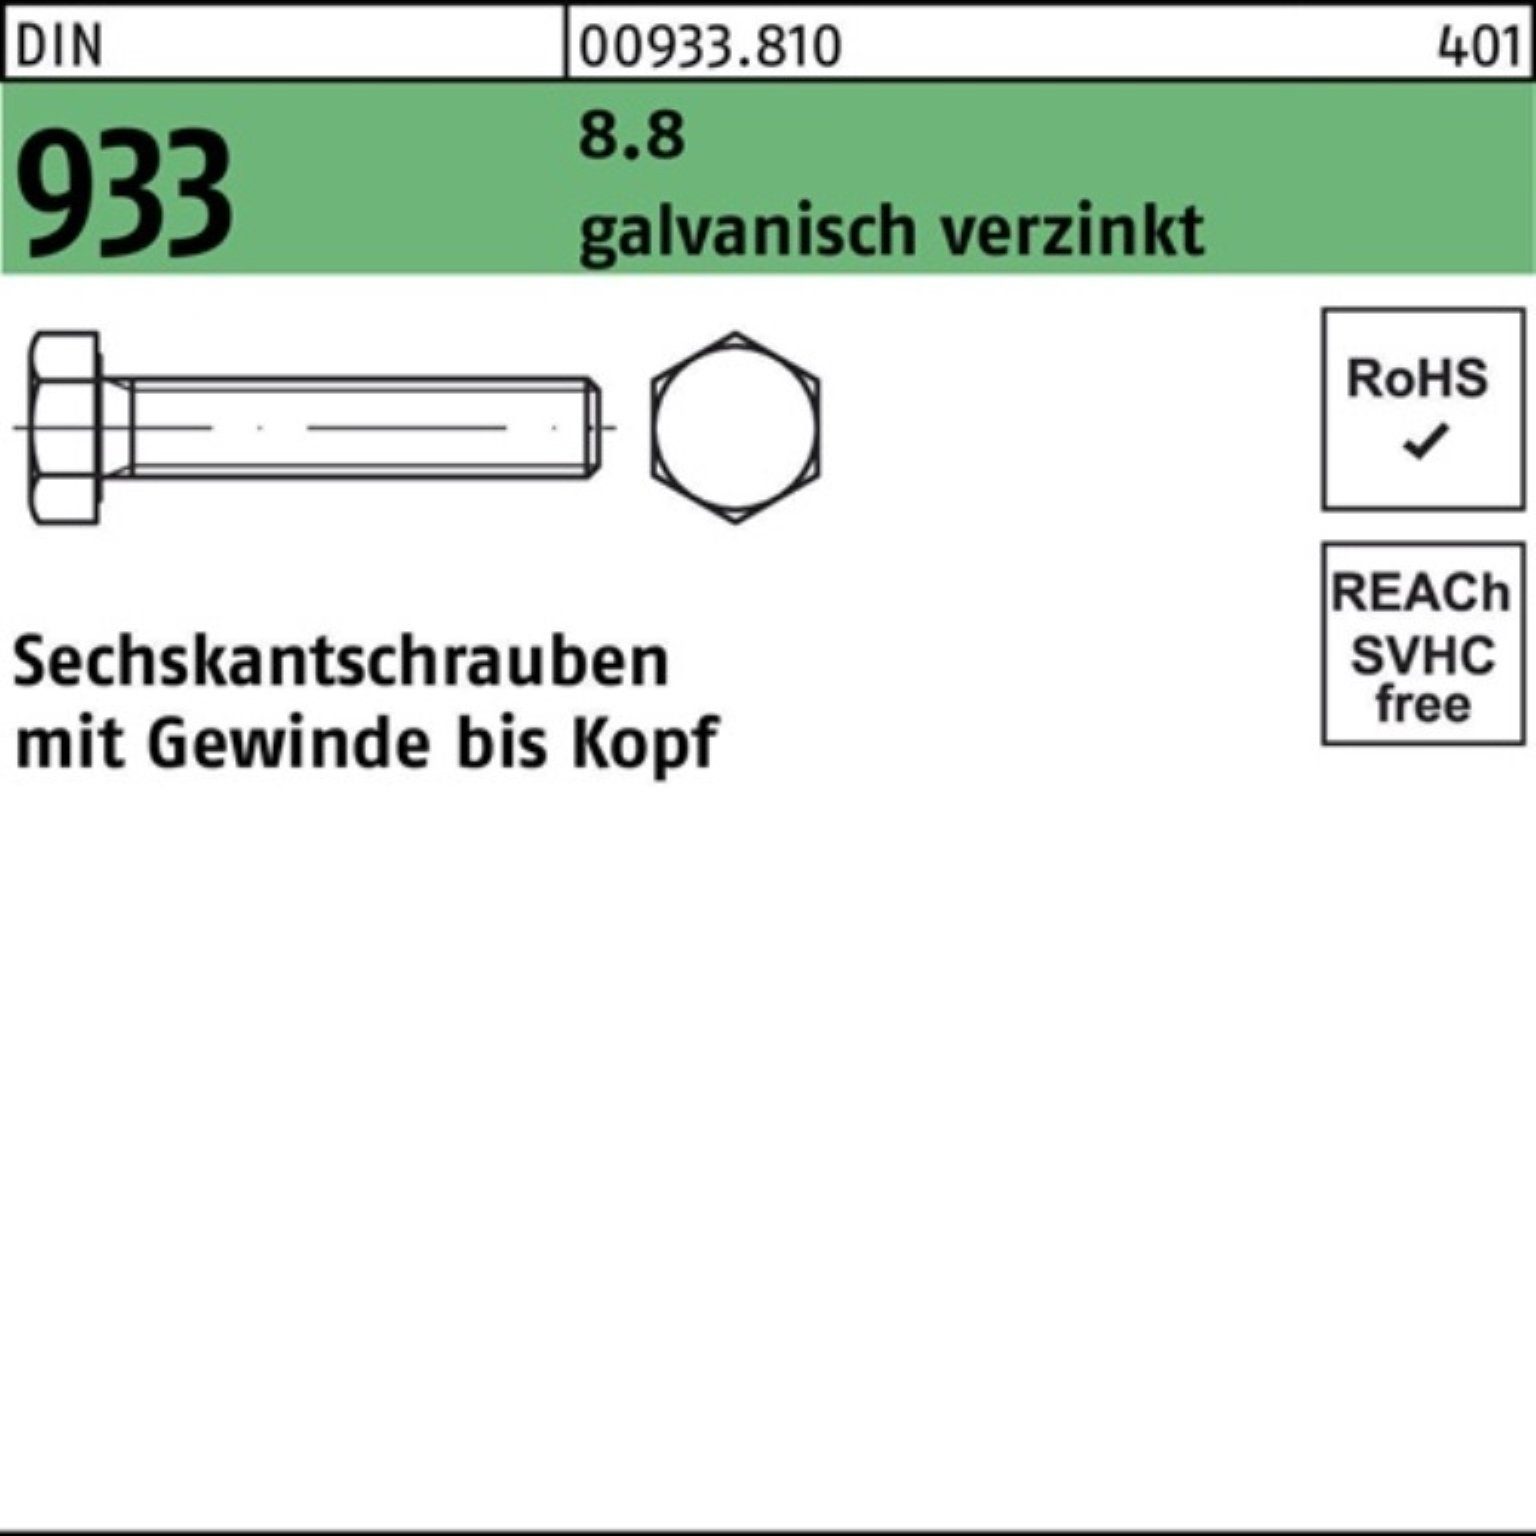 85 Reyher Sechskantschraube Pack 100er 1 Sechskantschraube 933 Stüc galv.verz. 8.8 M36x VG DIN